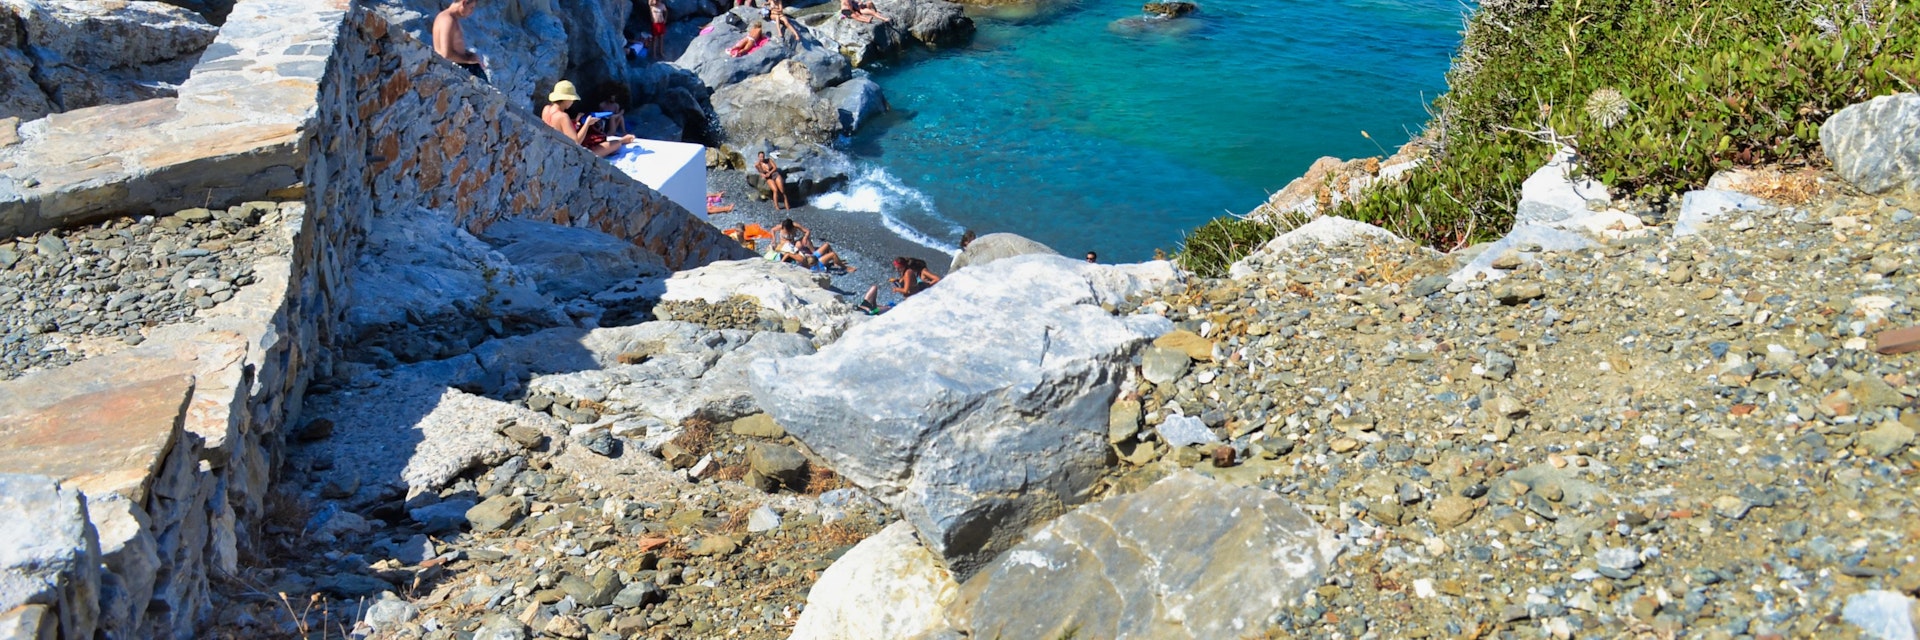 People sunbathing on the rocks in Agia Anna beach at Amorgos island of Greece.